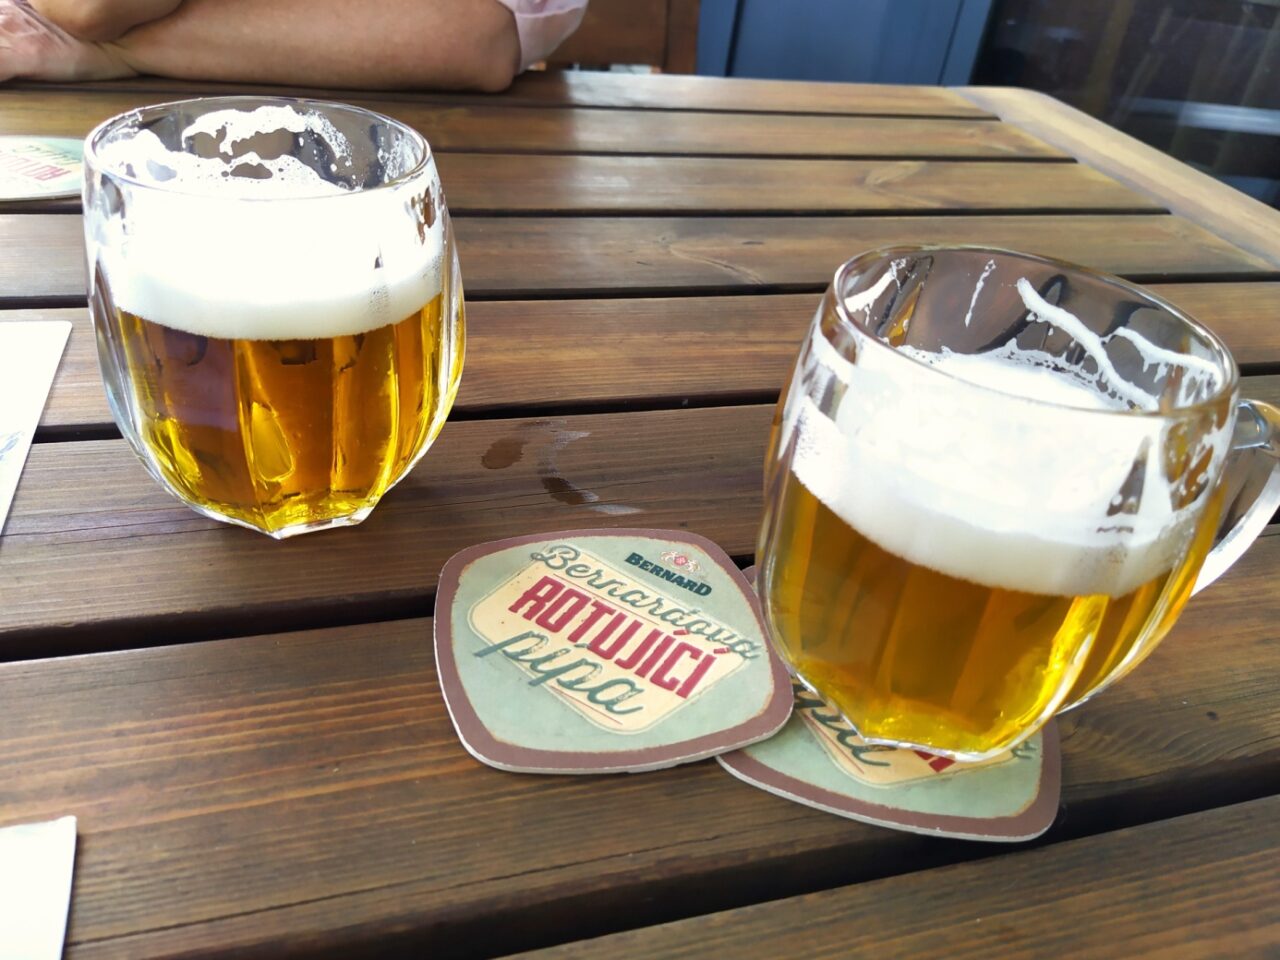 Bernard-Bar in Brno